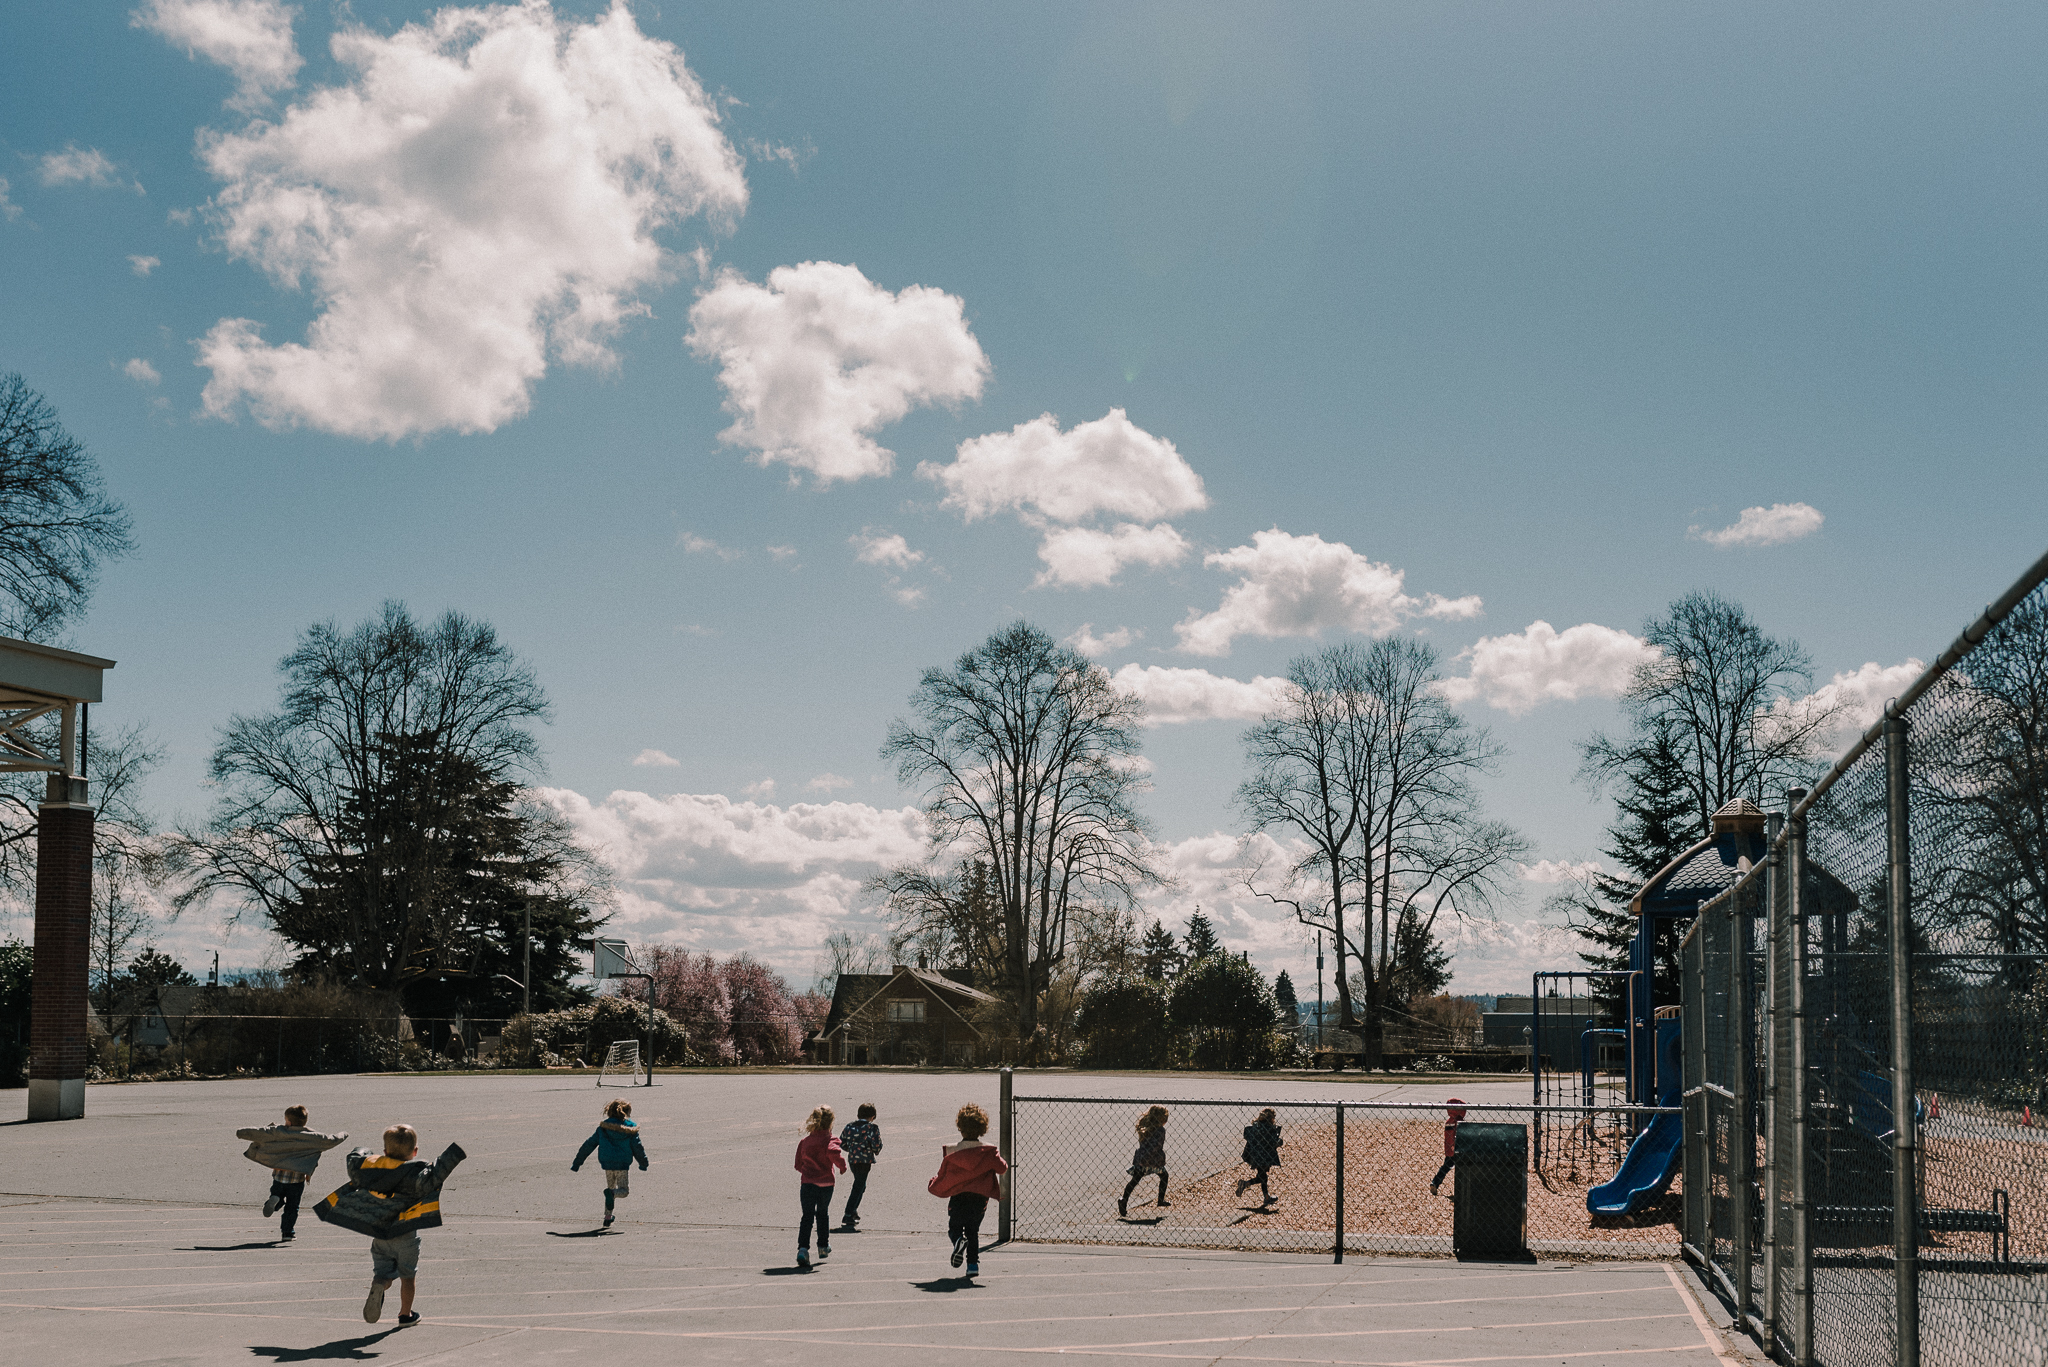 University-Ravenna Cooperative Preschool : Outdoor playground at Bryant Elementary School